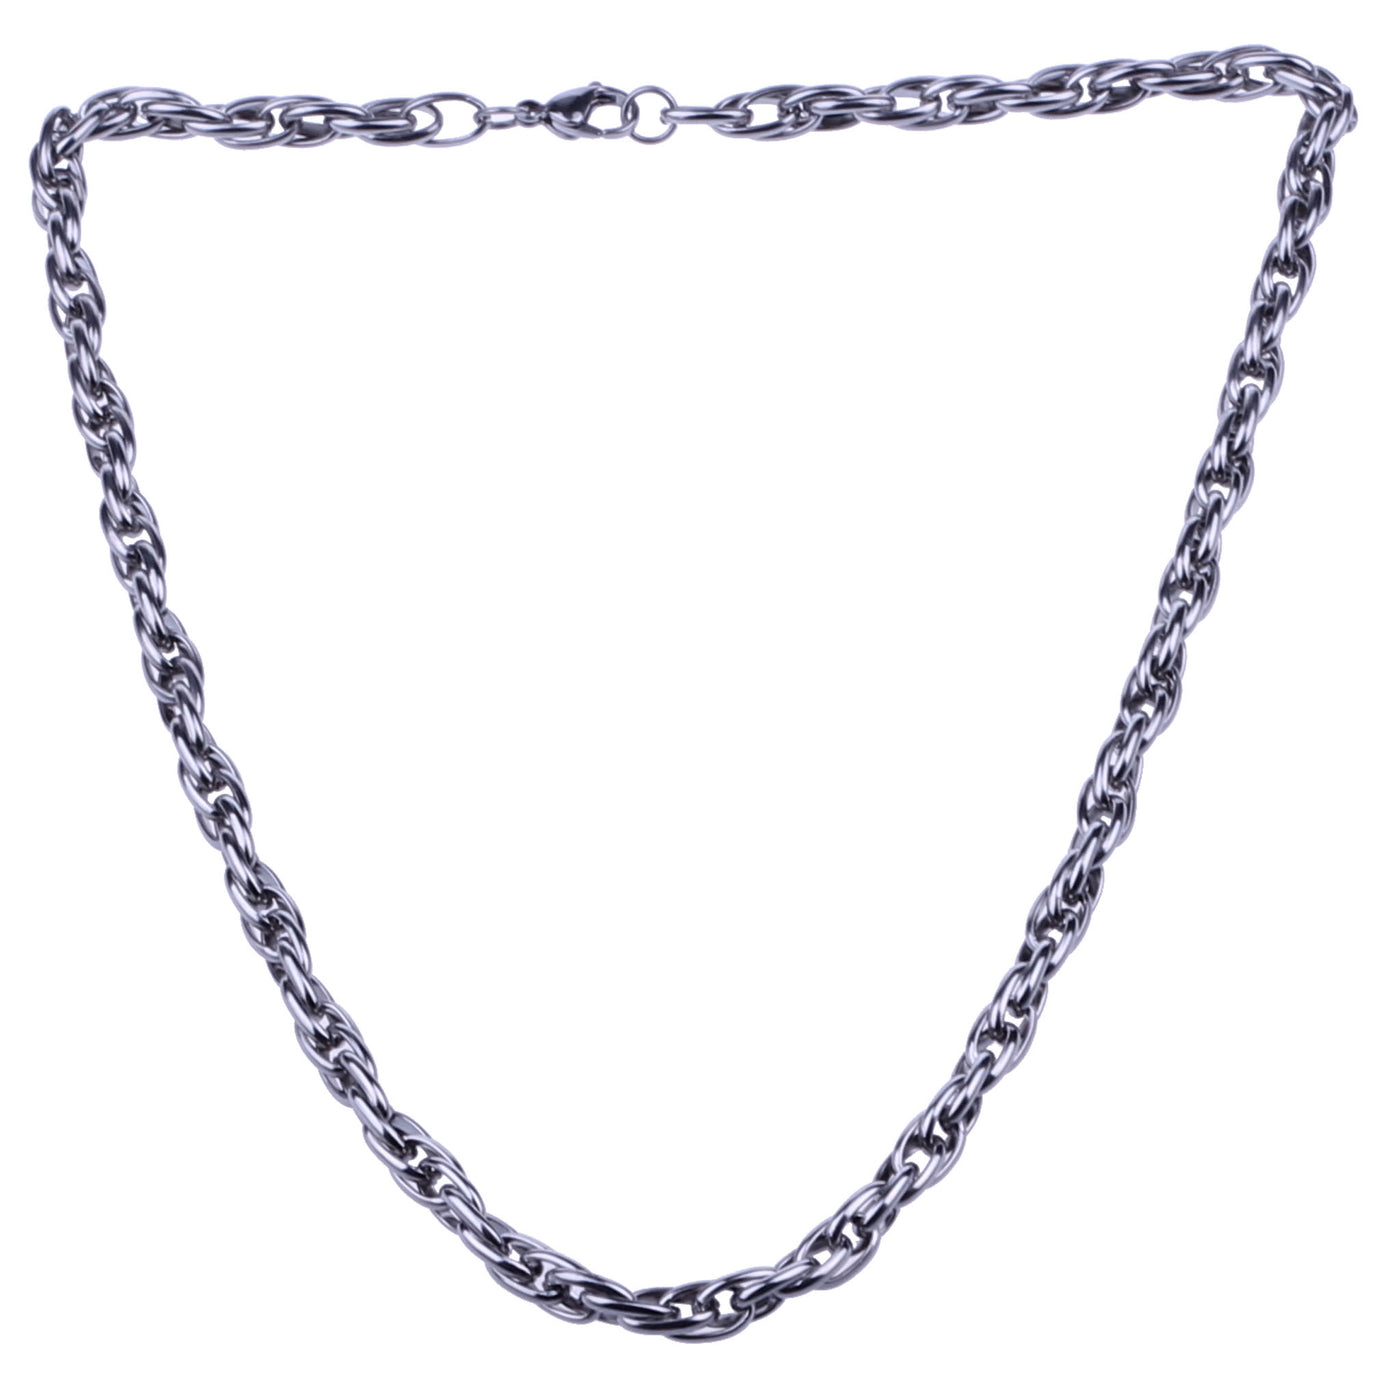 Steel chain 54cm